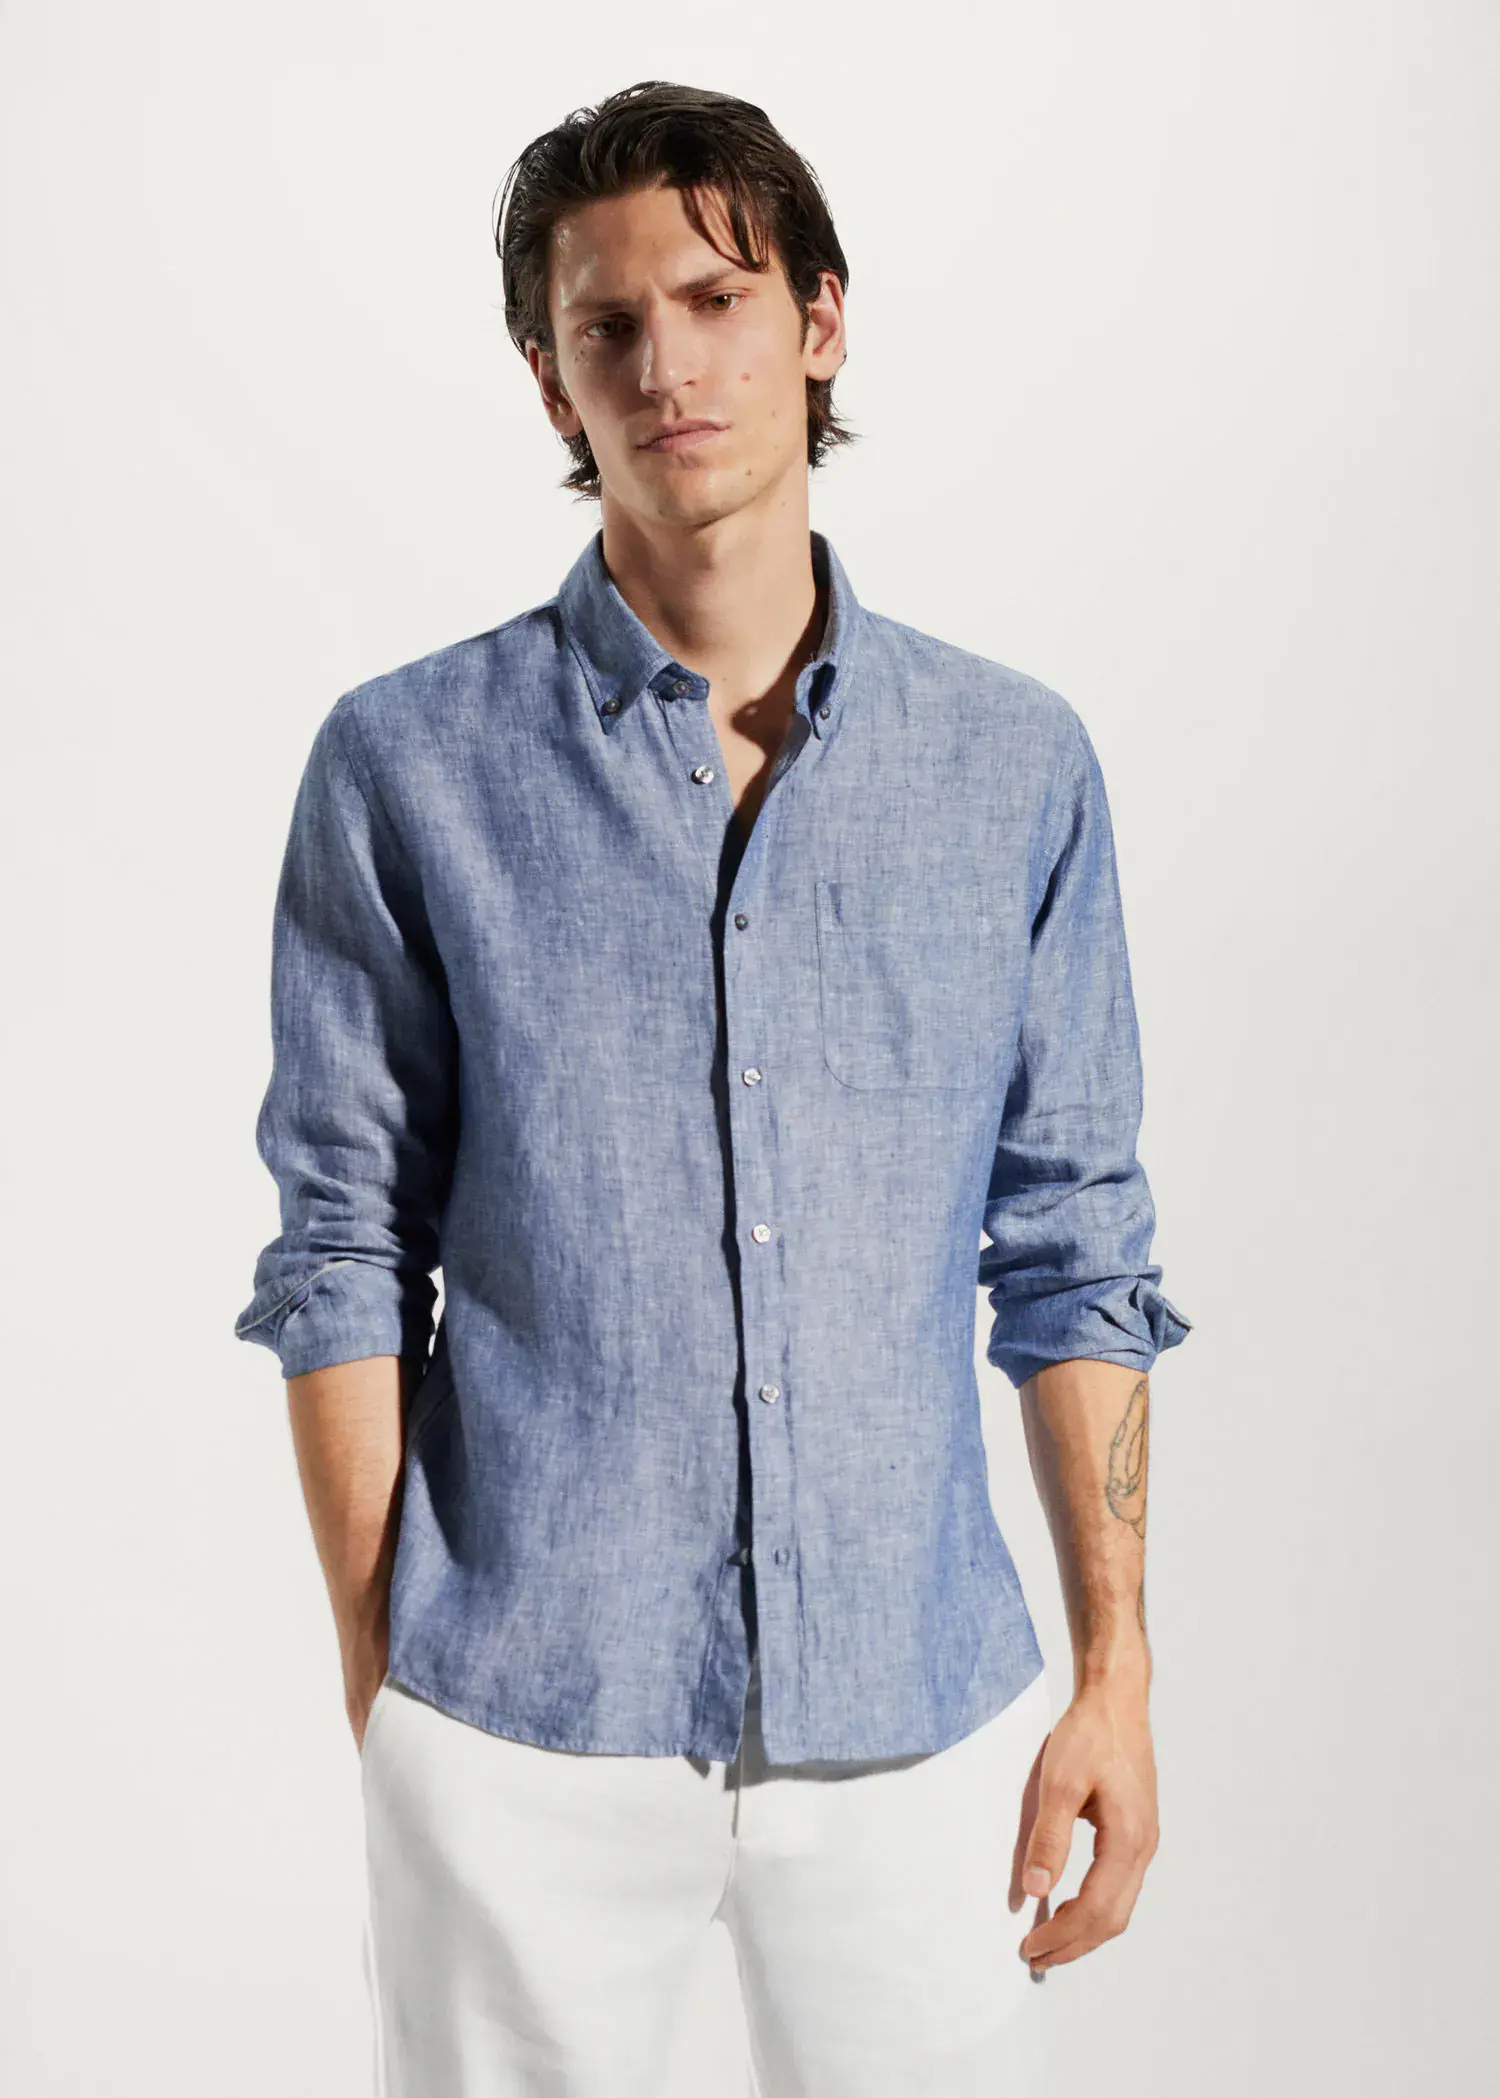 Mango 100% linen slim-fit shirt. a man wearing a blue shirt and white pants. 